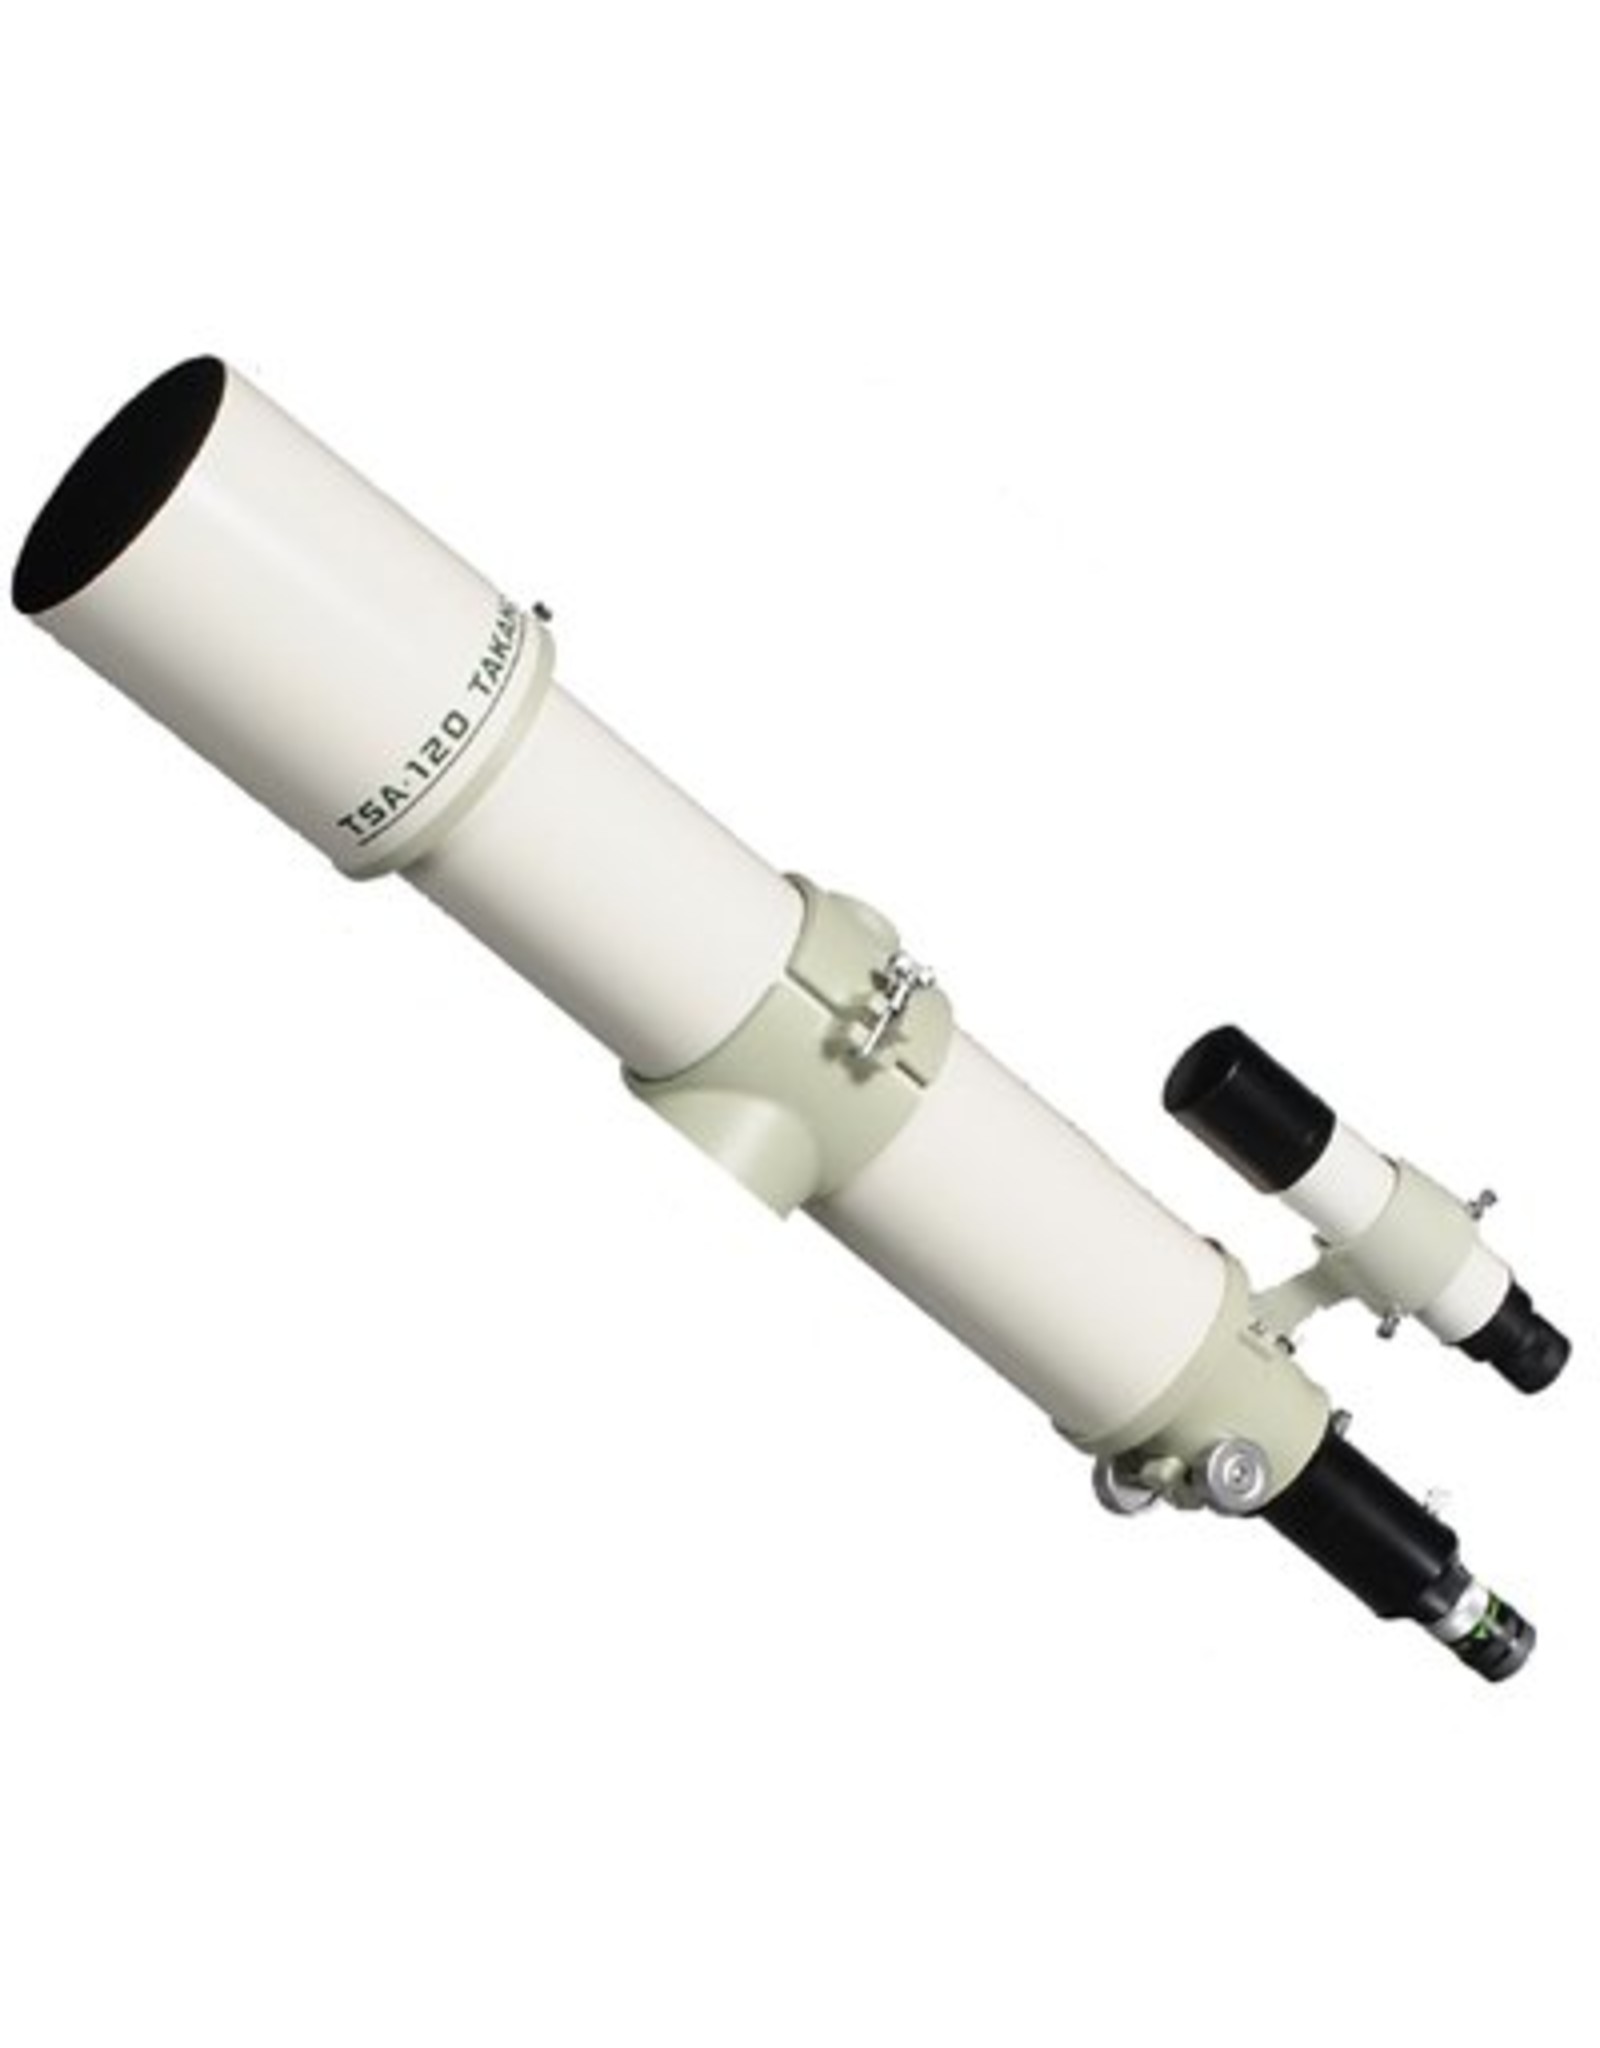 Takahashi Tsa 120 Triplet Apo Refractor Camera Concepts And Telescope